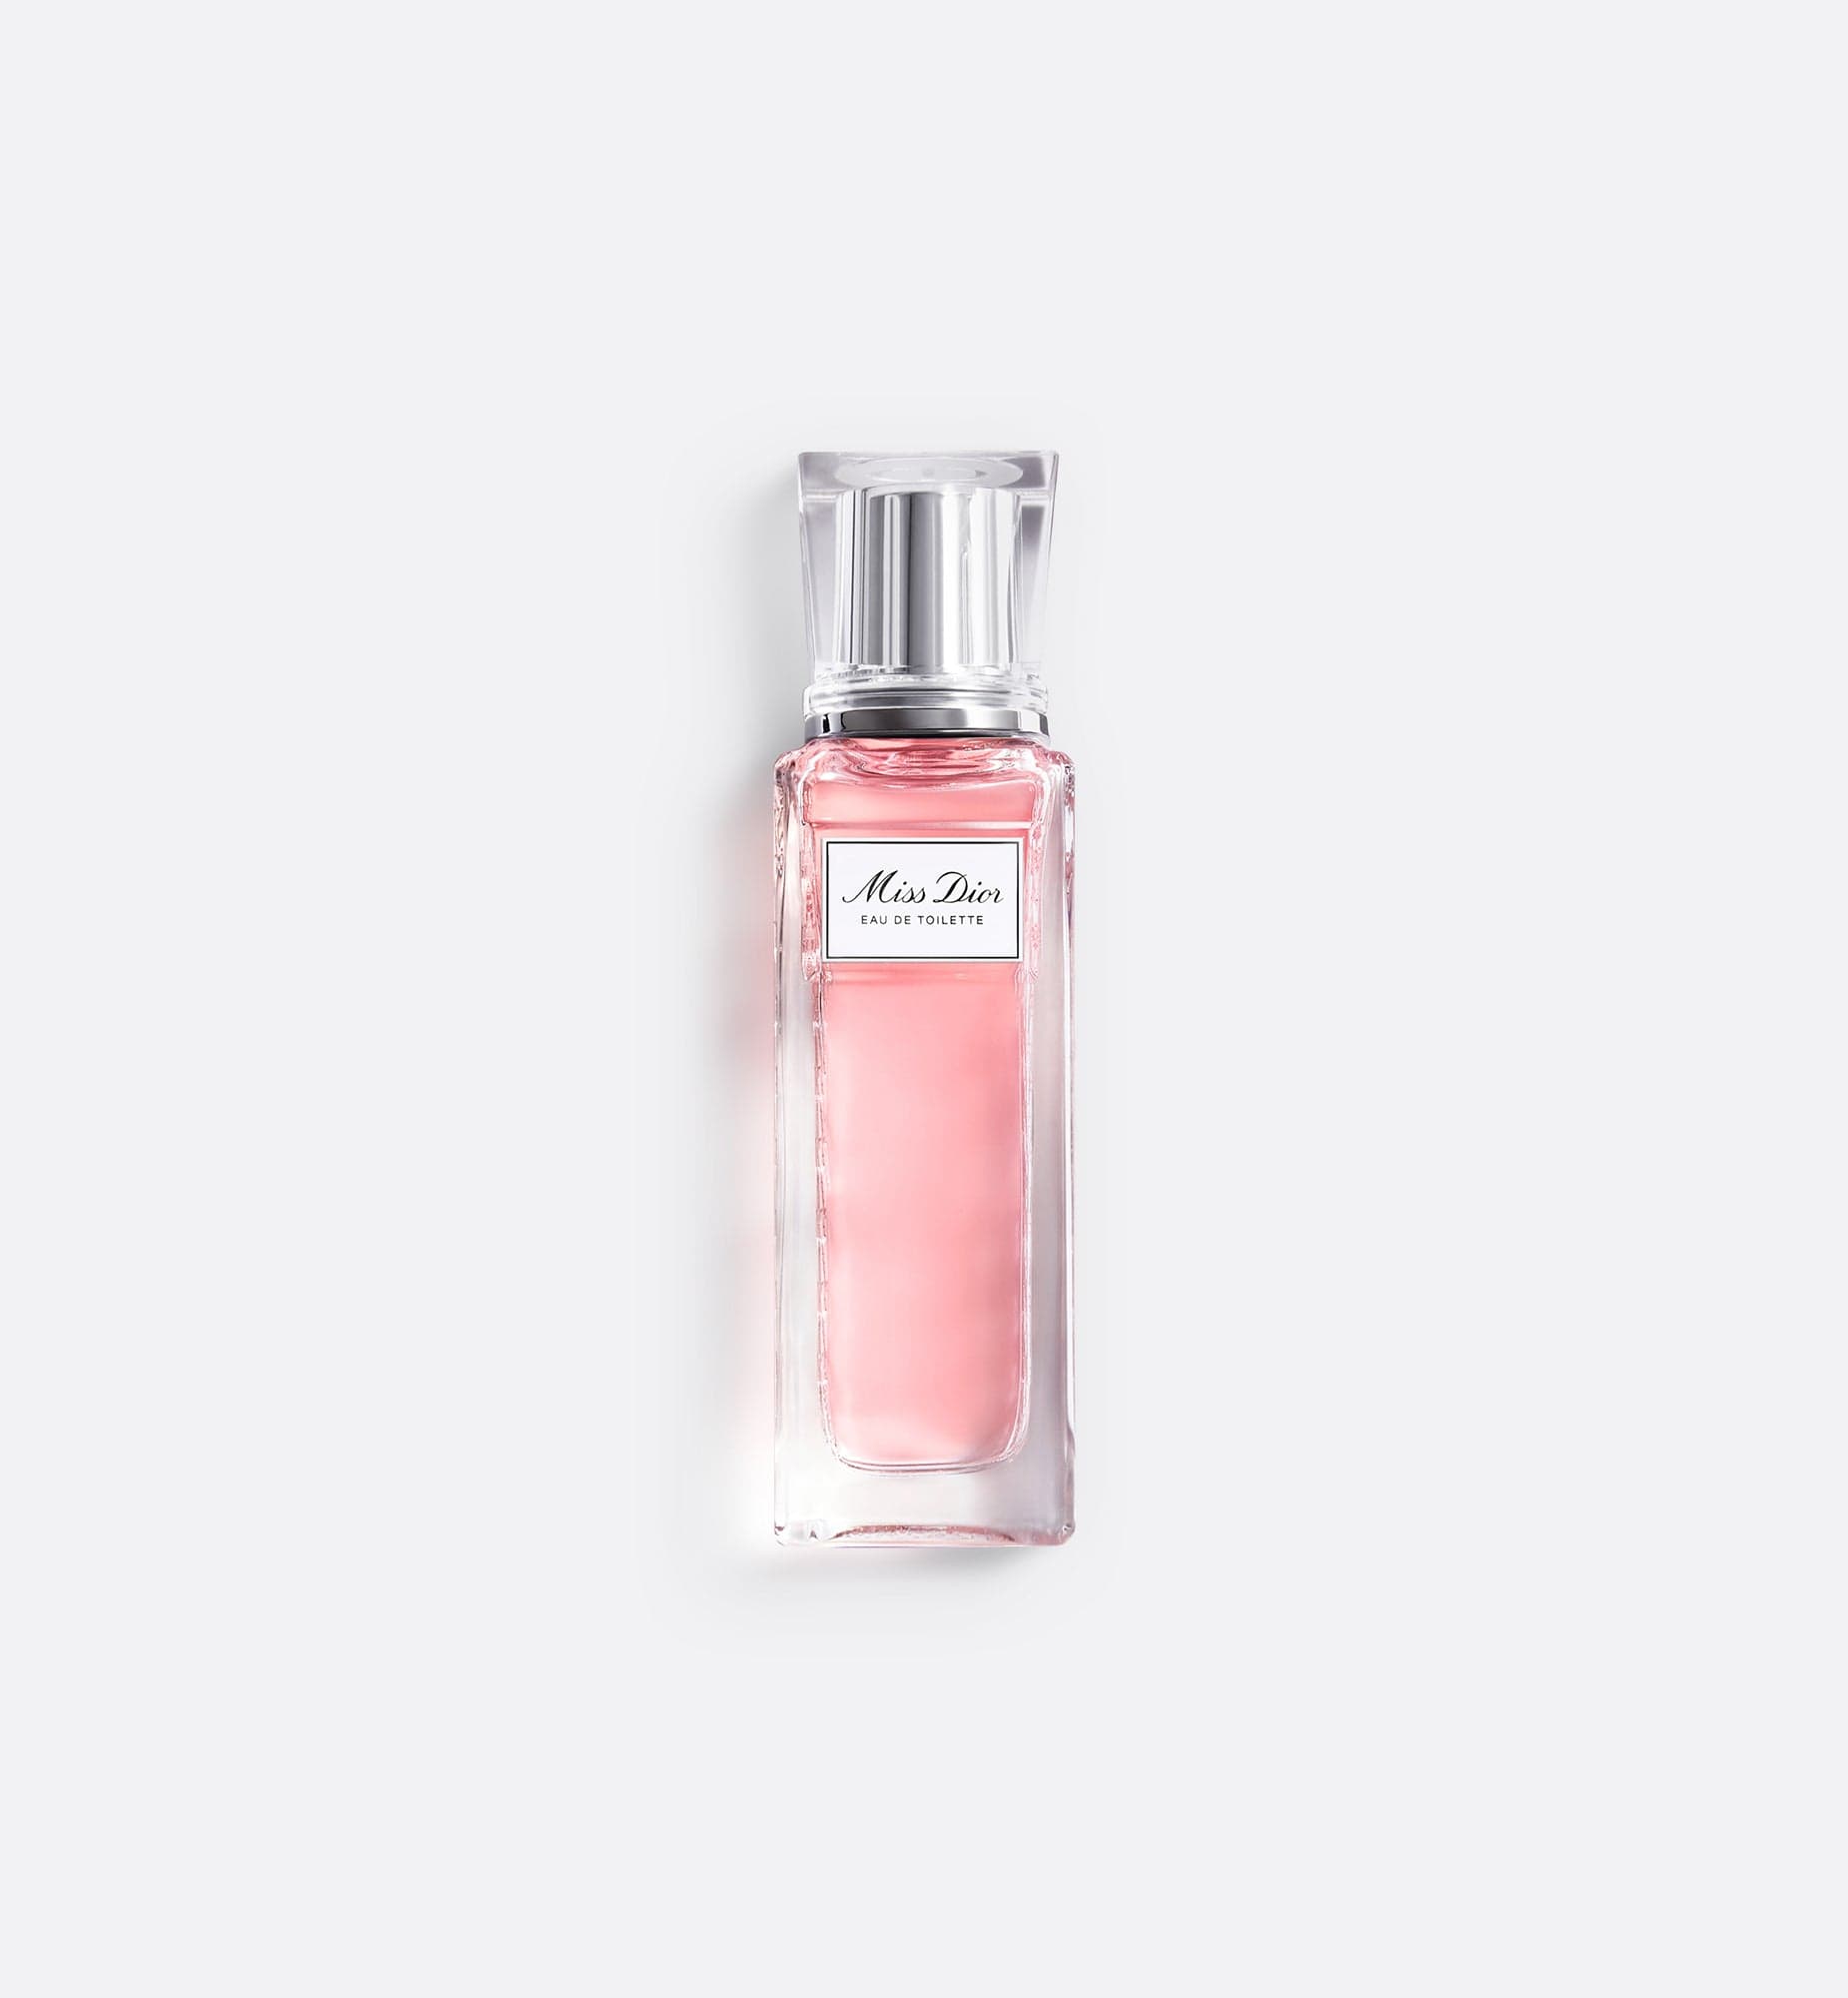 Parfum Dior Blooming Flash Sales  azccomco 1692193184